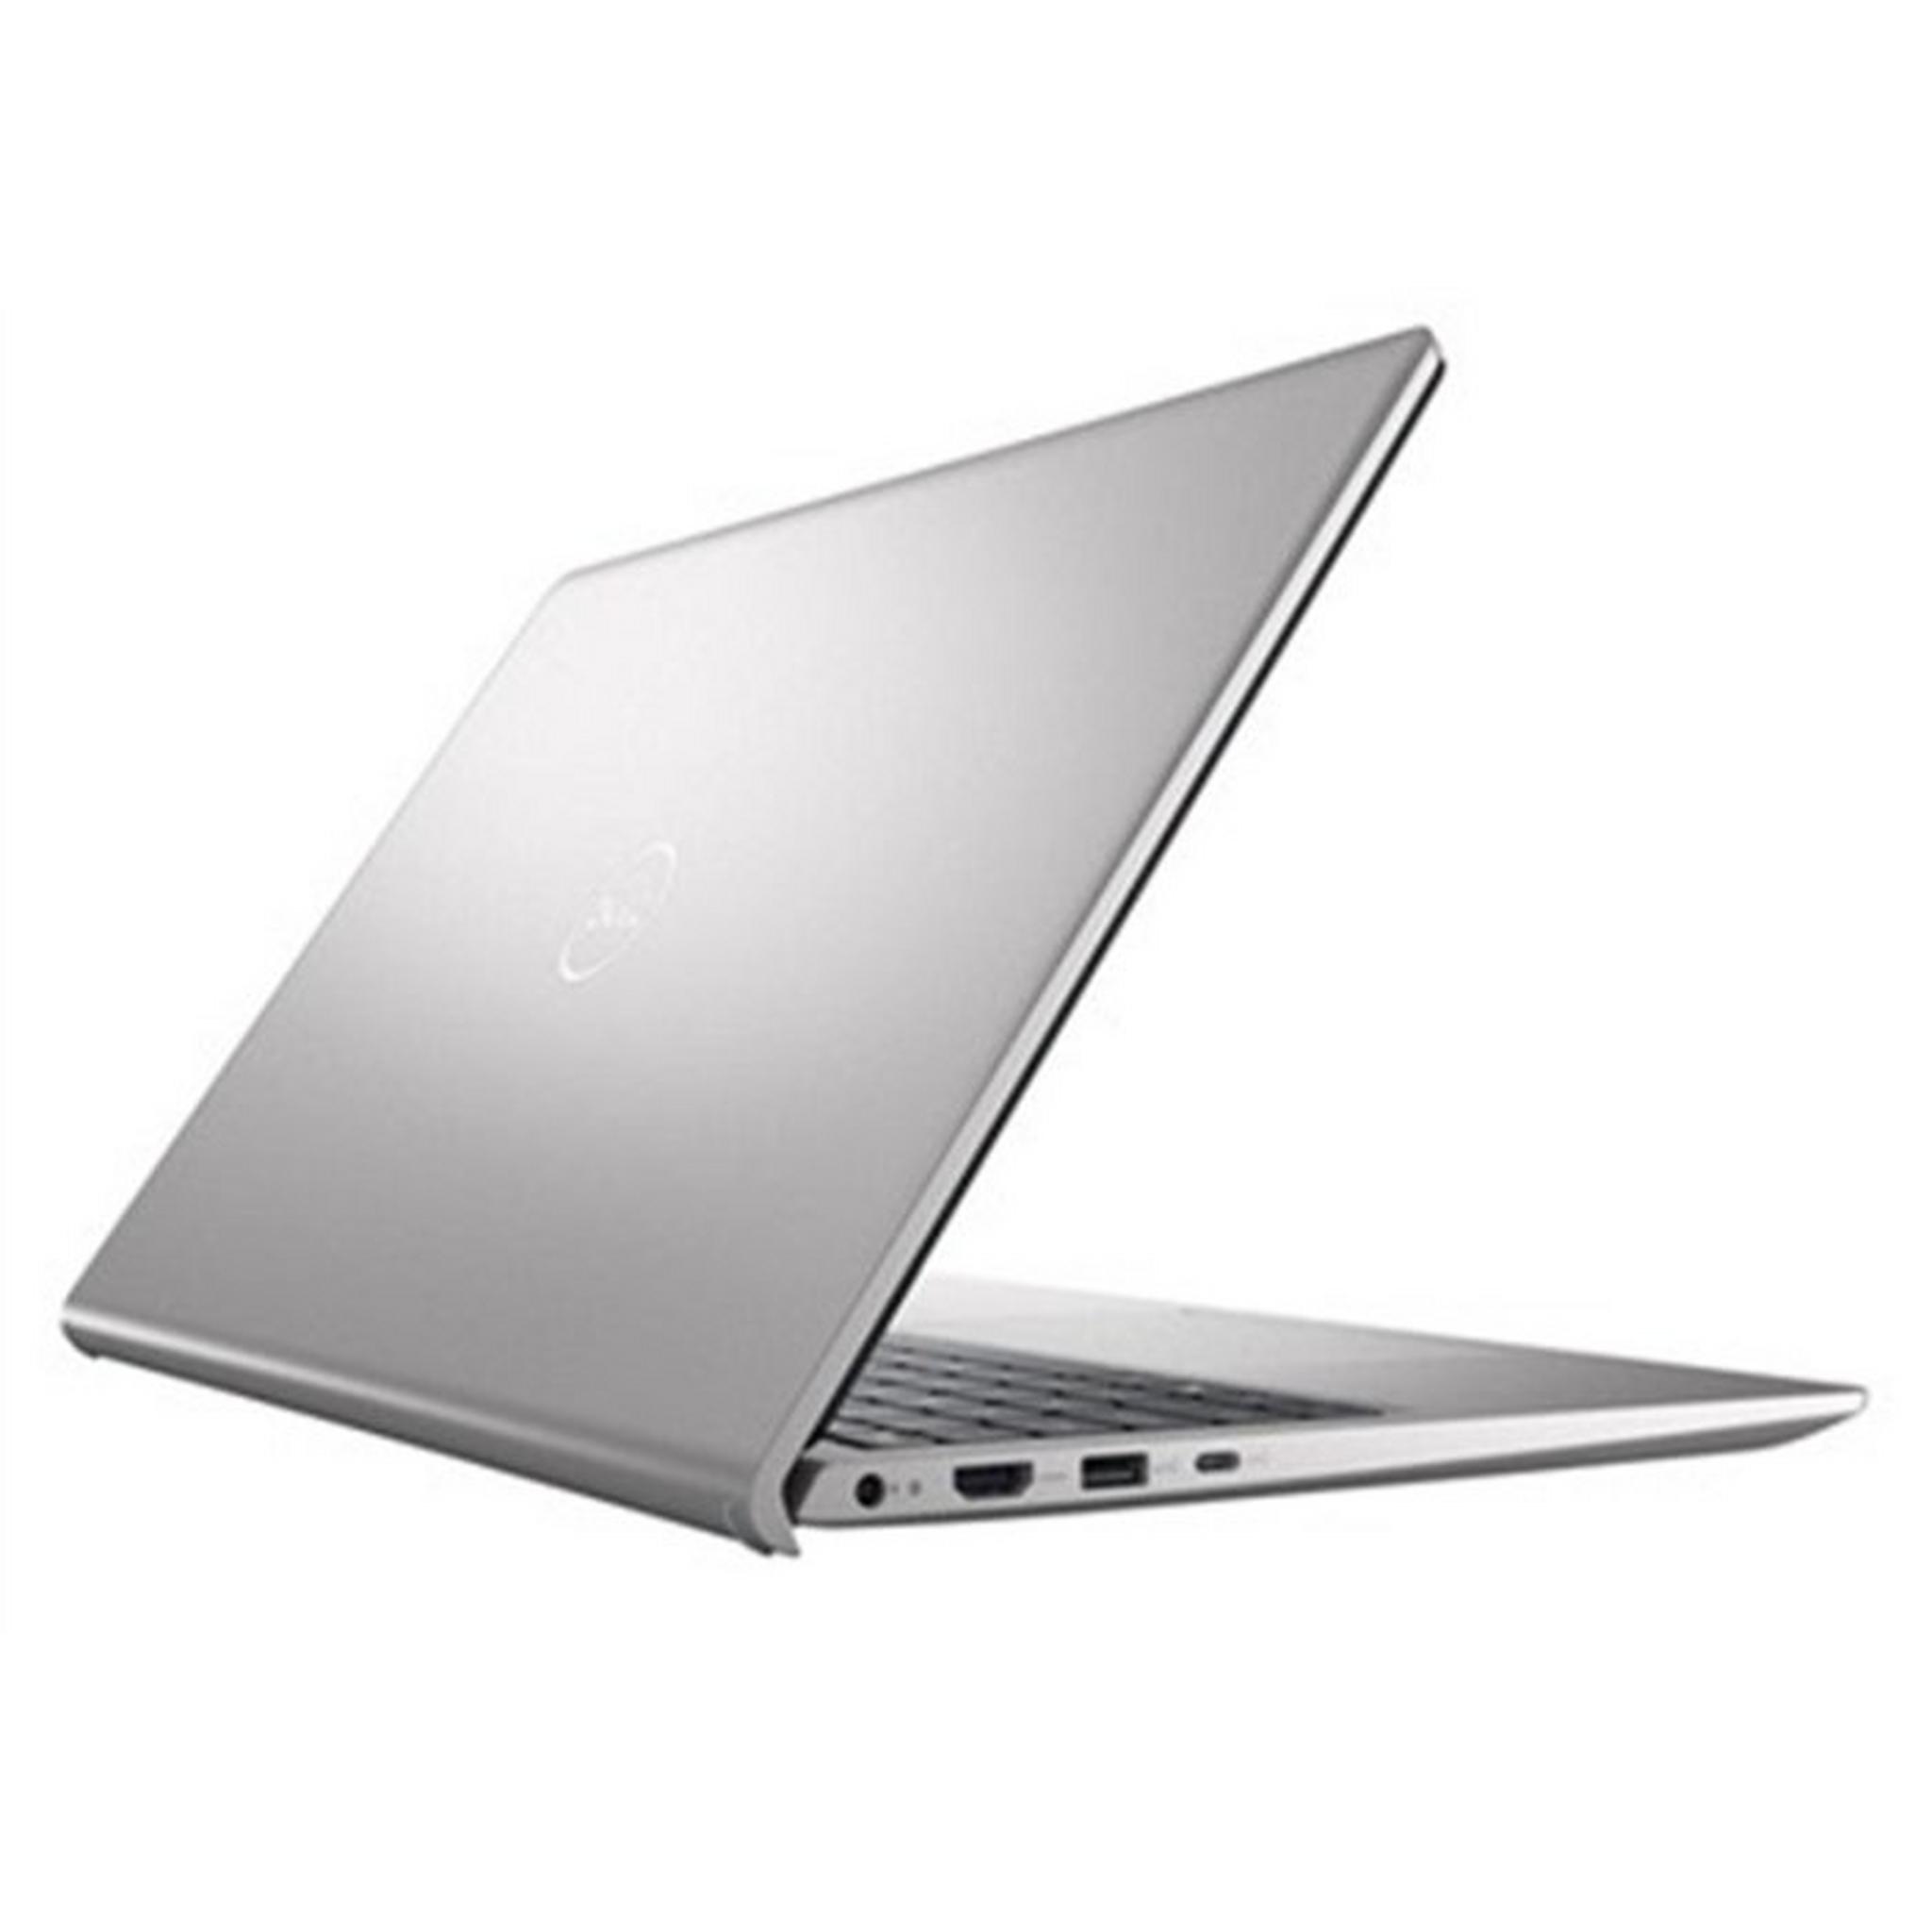 Dell Inspire 1015 Intel Core i5 11th Gen, 8GB RAM, 1TB HDD + 256GB SSD, 15-inch Laptop - Silver